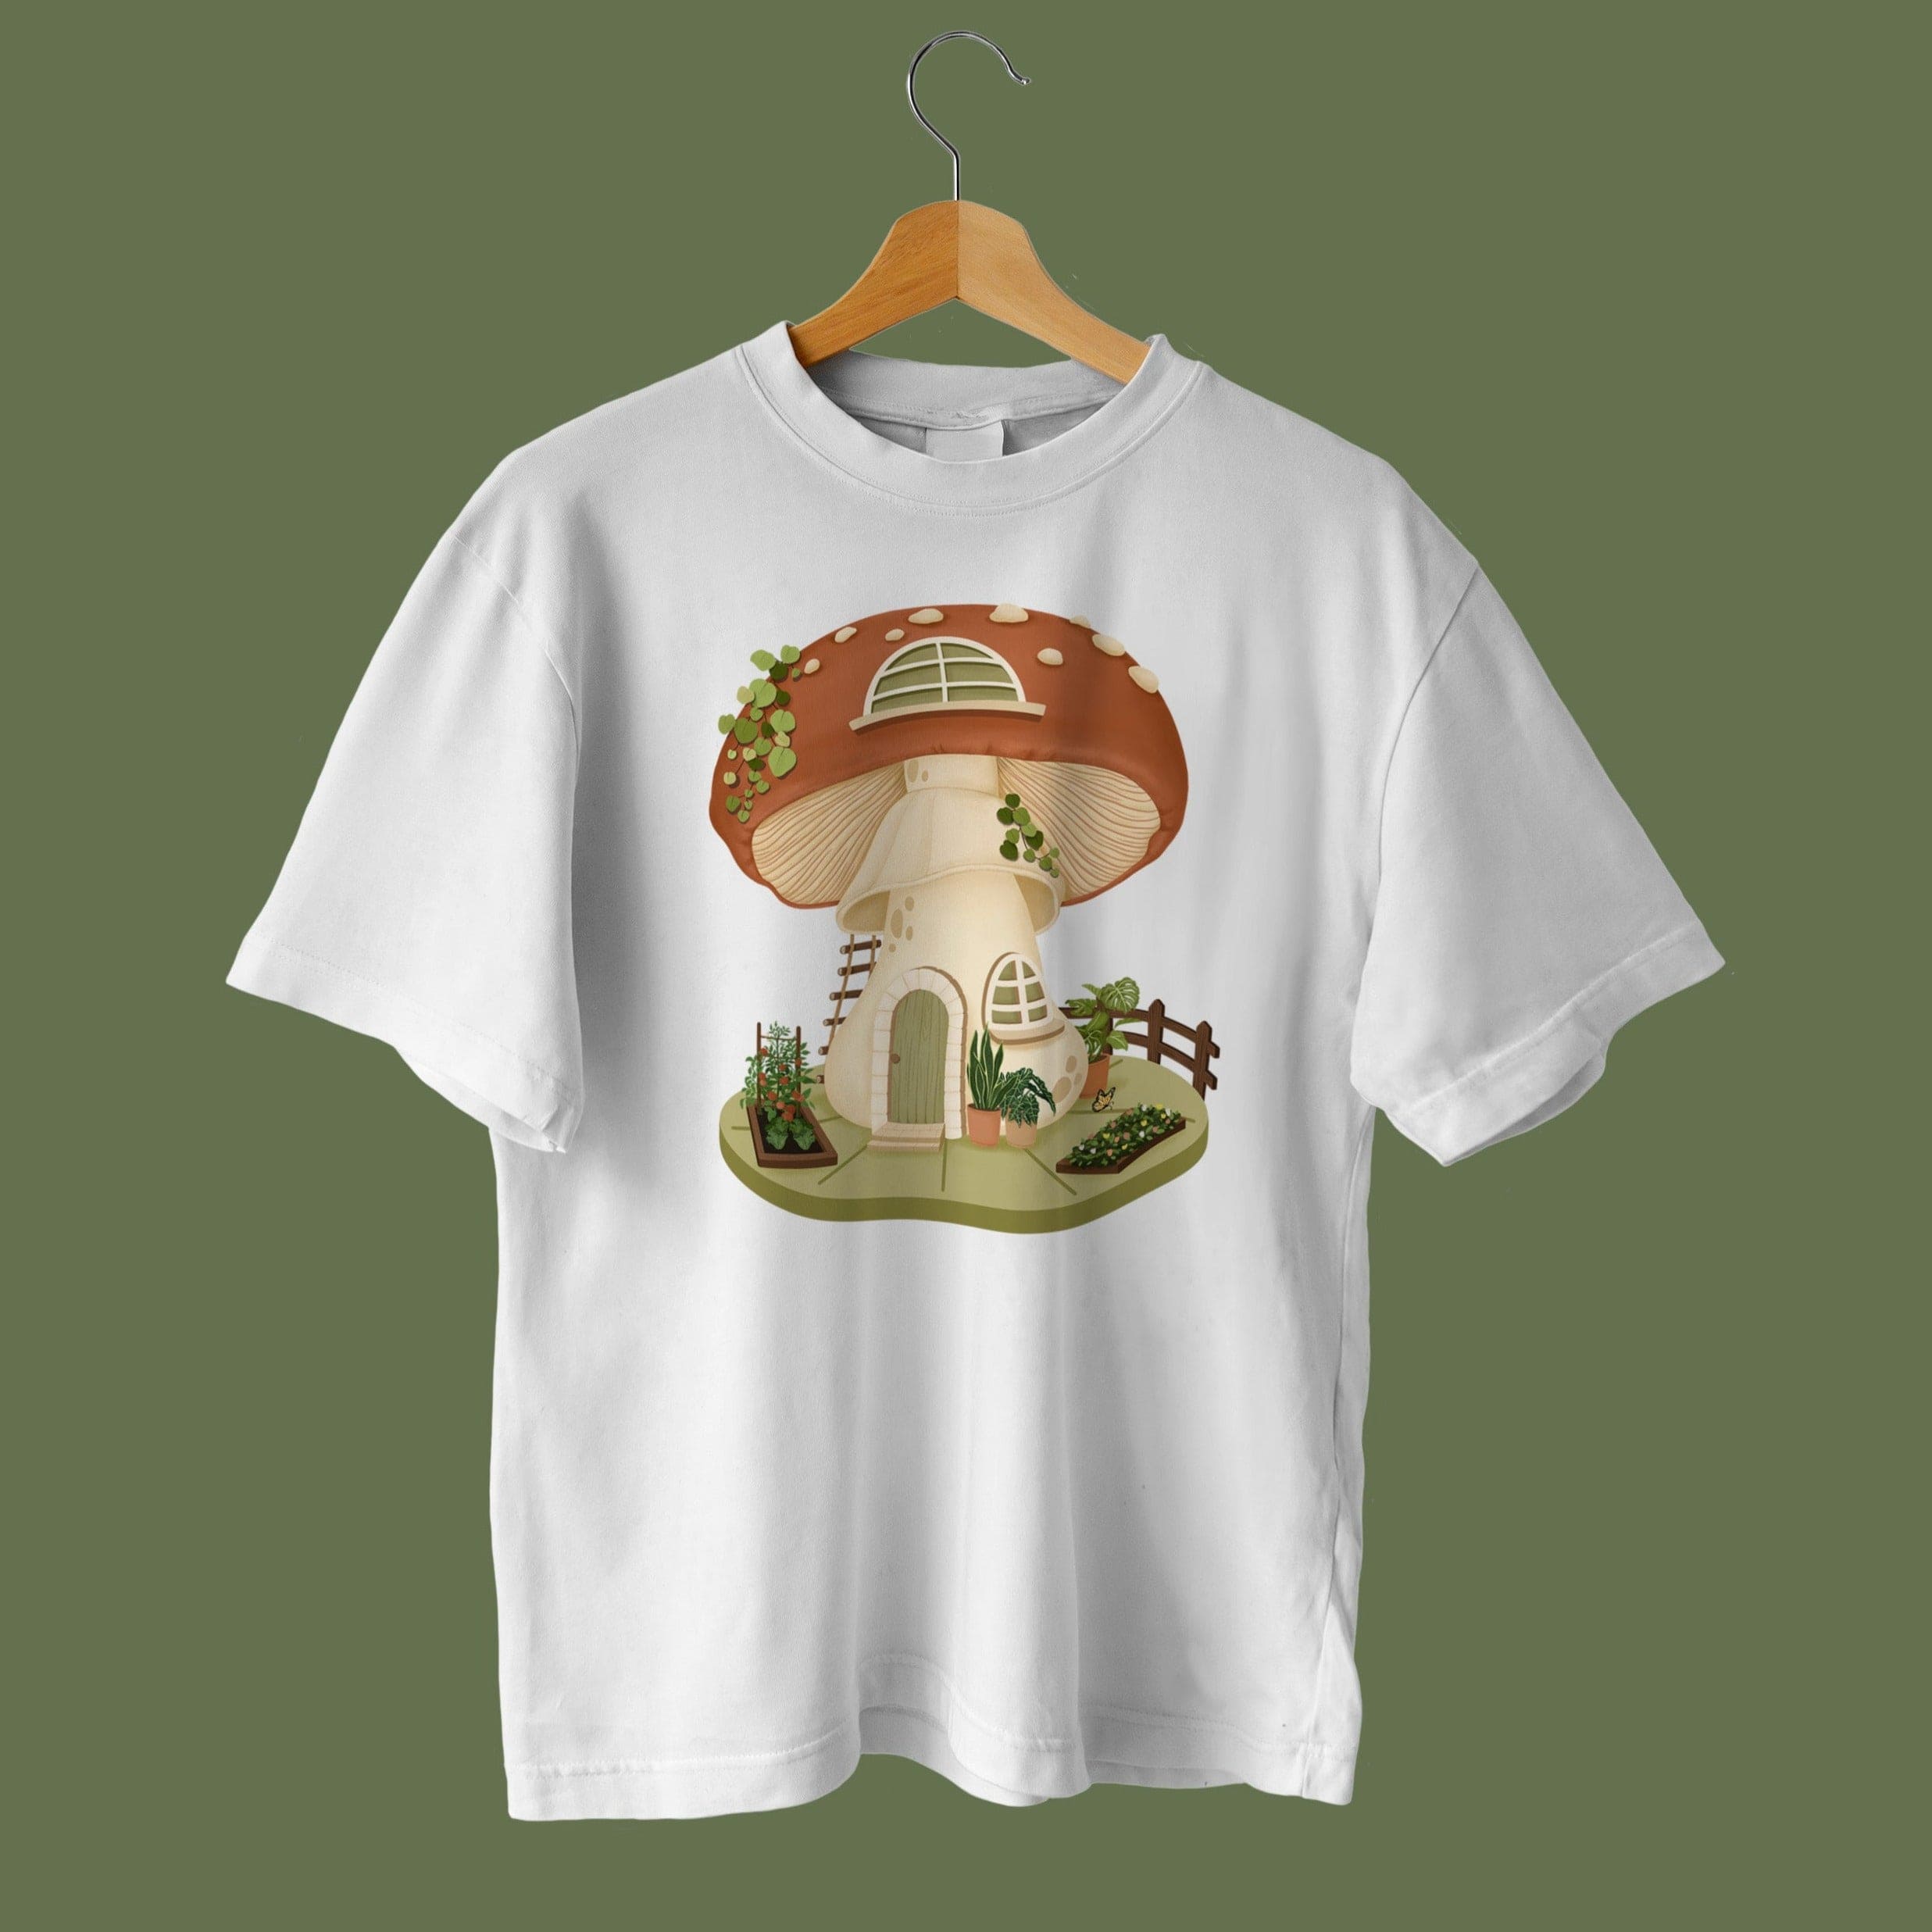 tenbox 10匣 mushroom night shirt L - シャツ